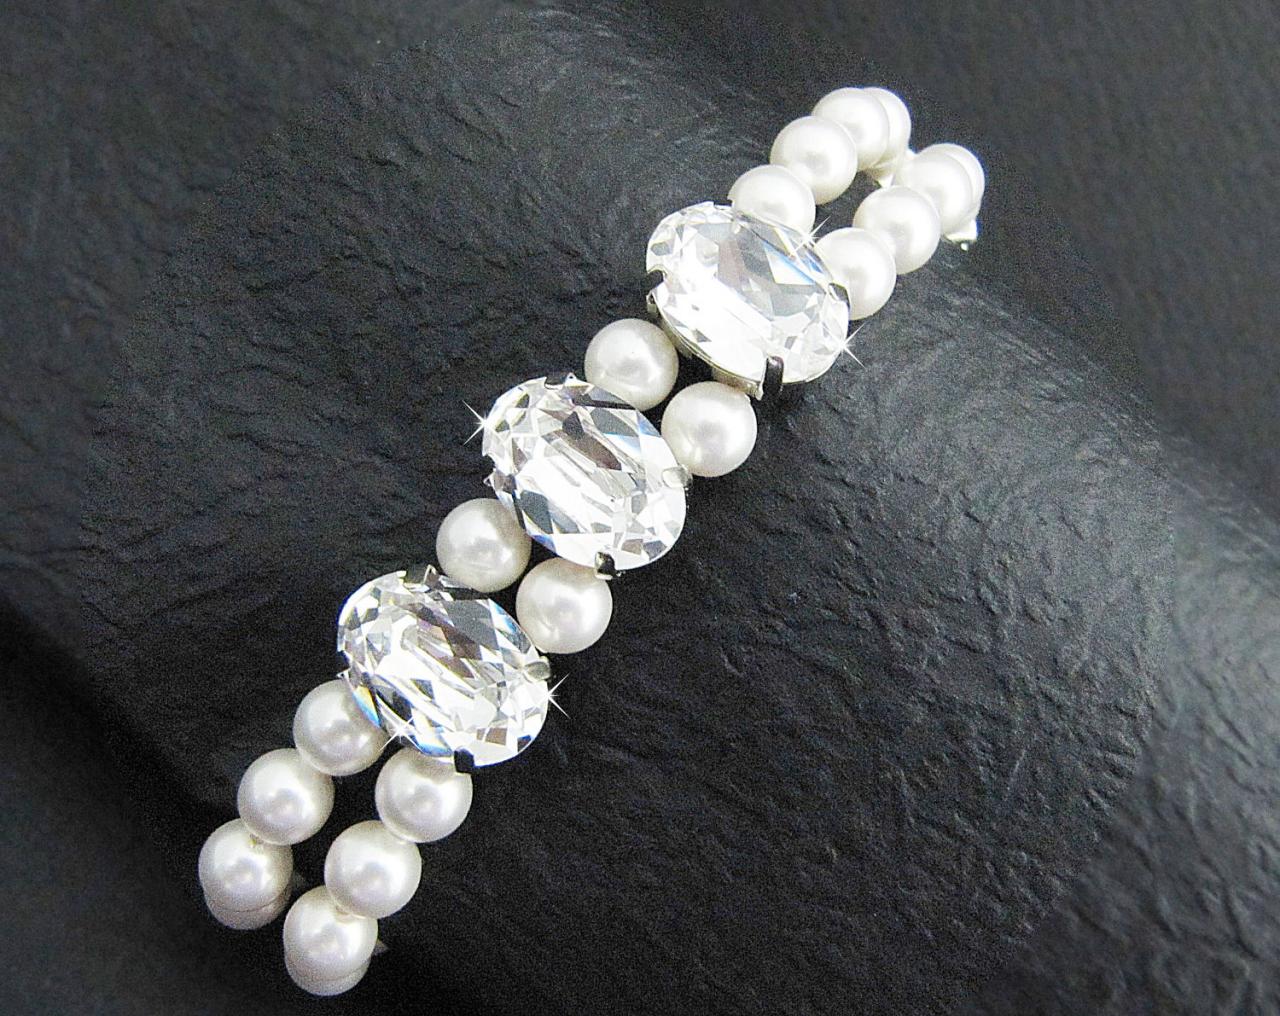 Wedding Jewelry Clear Swarovski Oval Crystals With 2 Strands Of Crystal White Swarovski Pearls Bridal Bridesmaid Bracelet